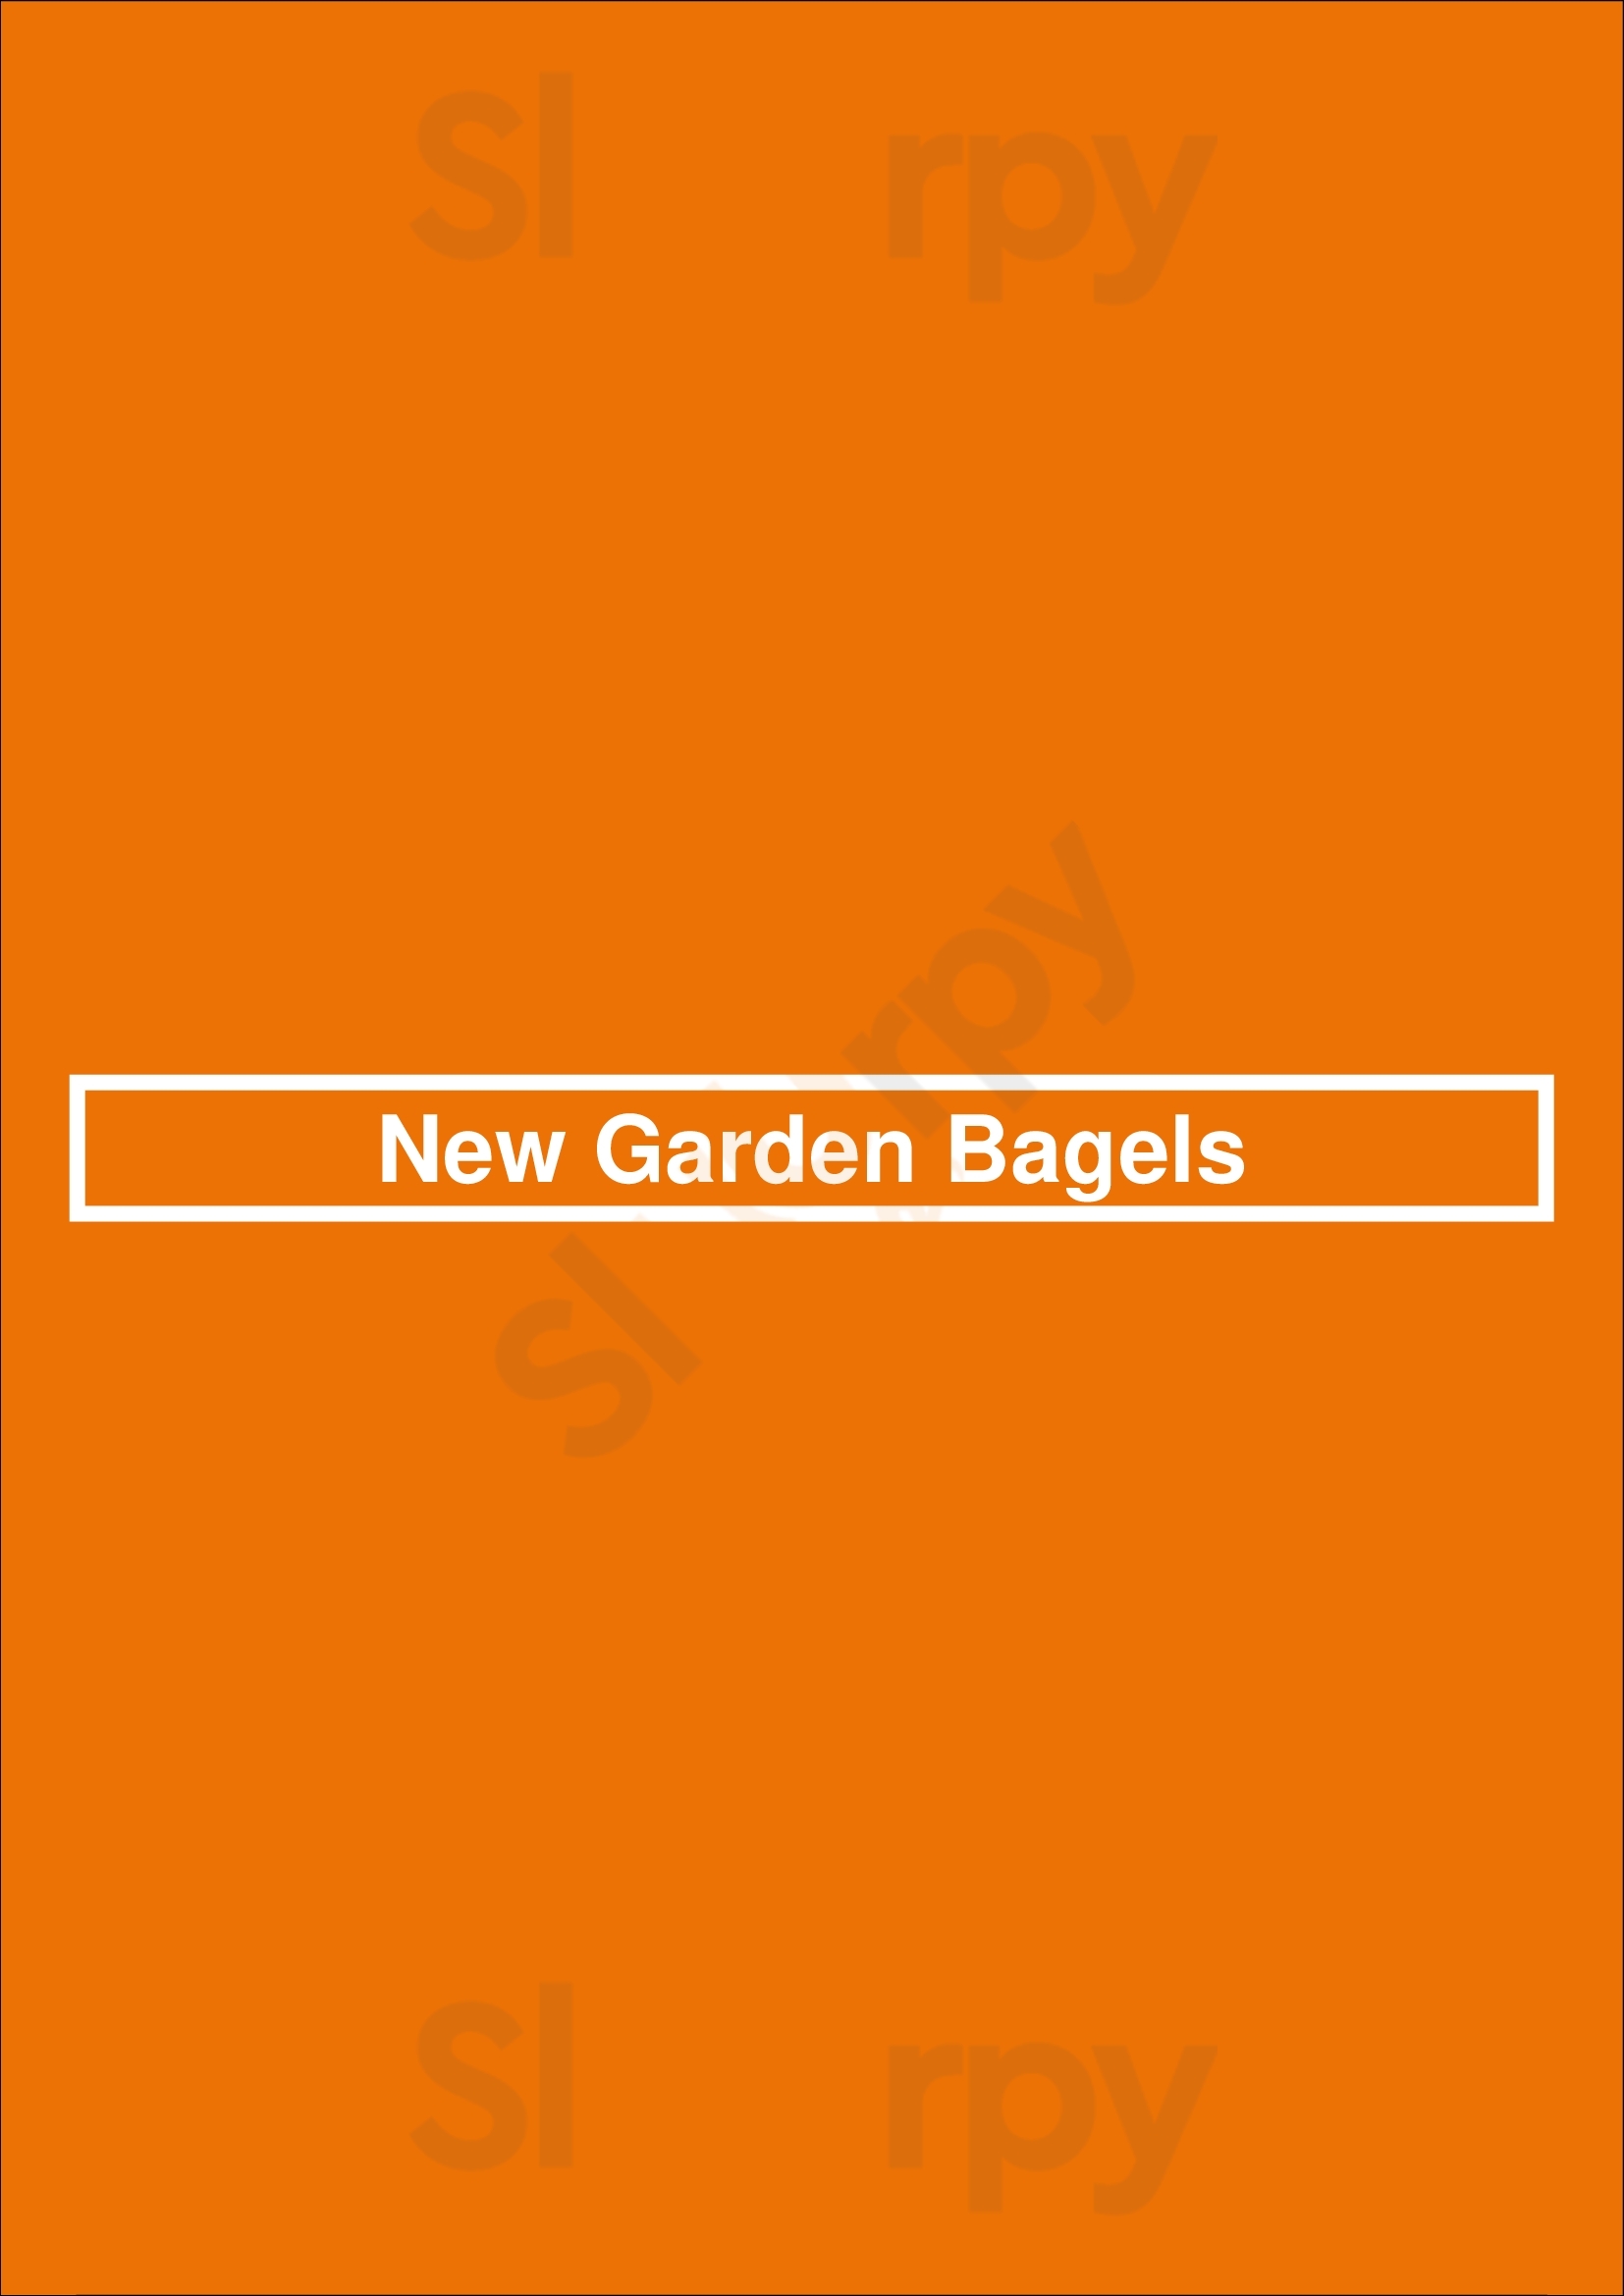 New Garden Bagels Greensboro Menu - 1